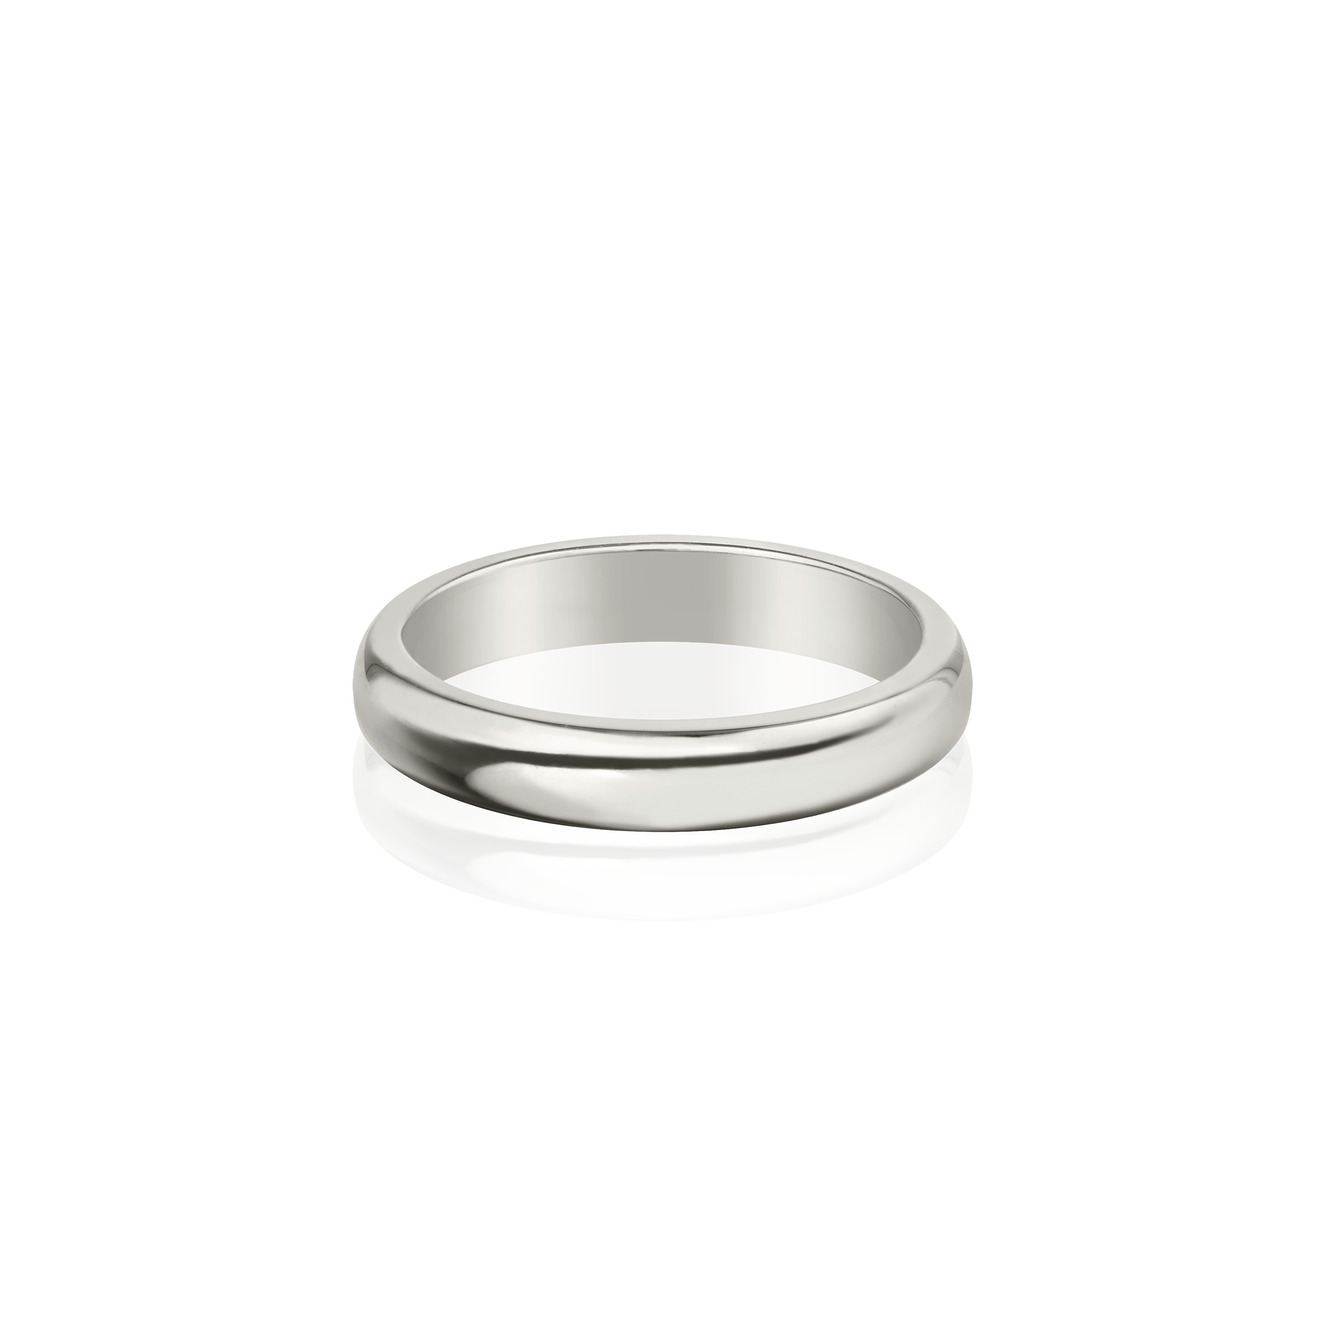 Vertigo Jewellery Lab Фаланговое кольцо из серебра ESSENTIALS vertigo jewellery lab позолоченный кафф из серебра essentials